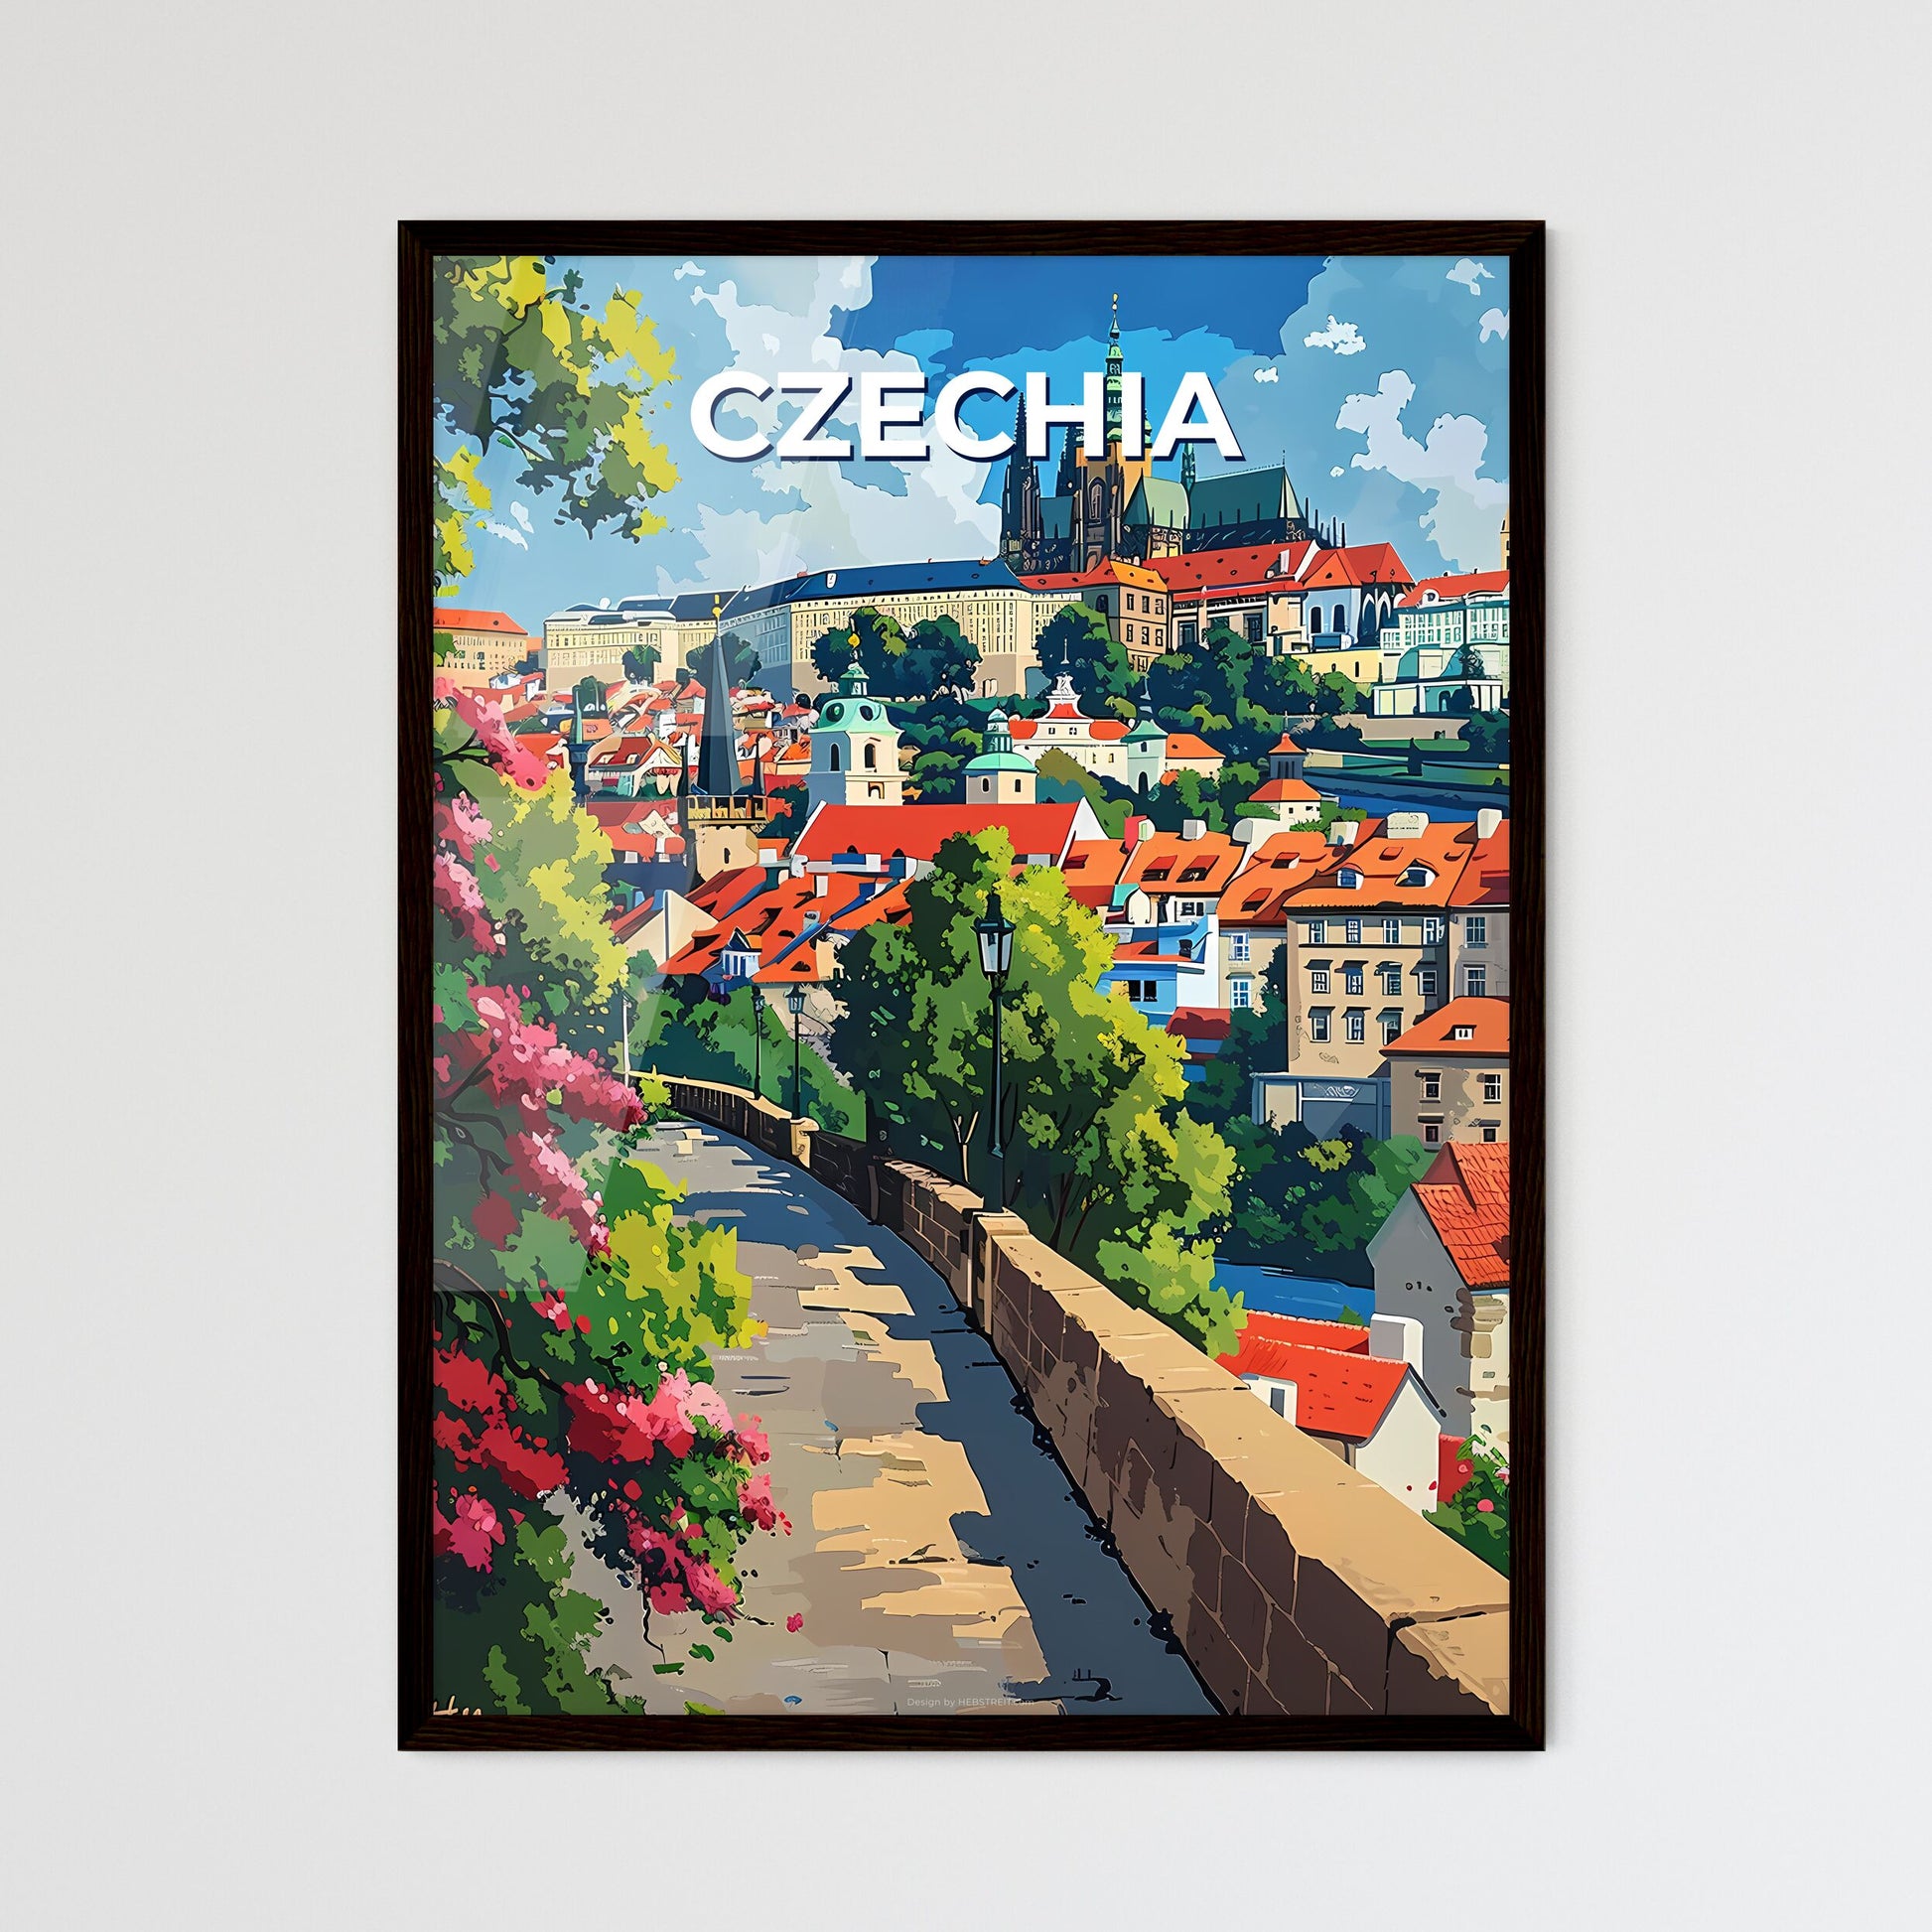 Vibrant Artistic Cityscape Painting, Czechia